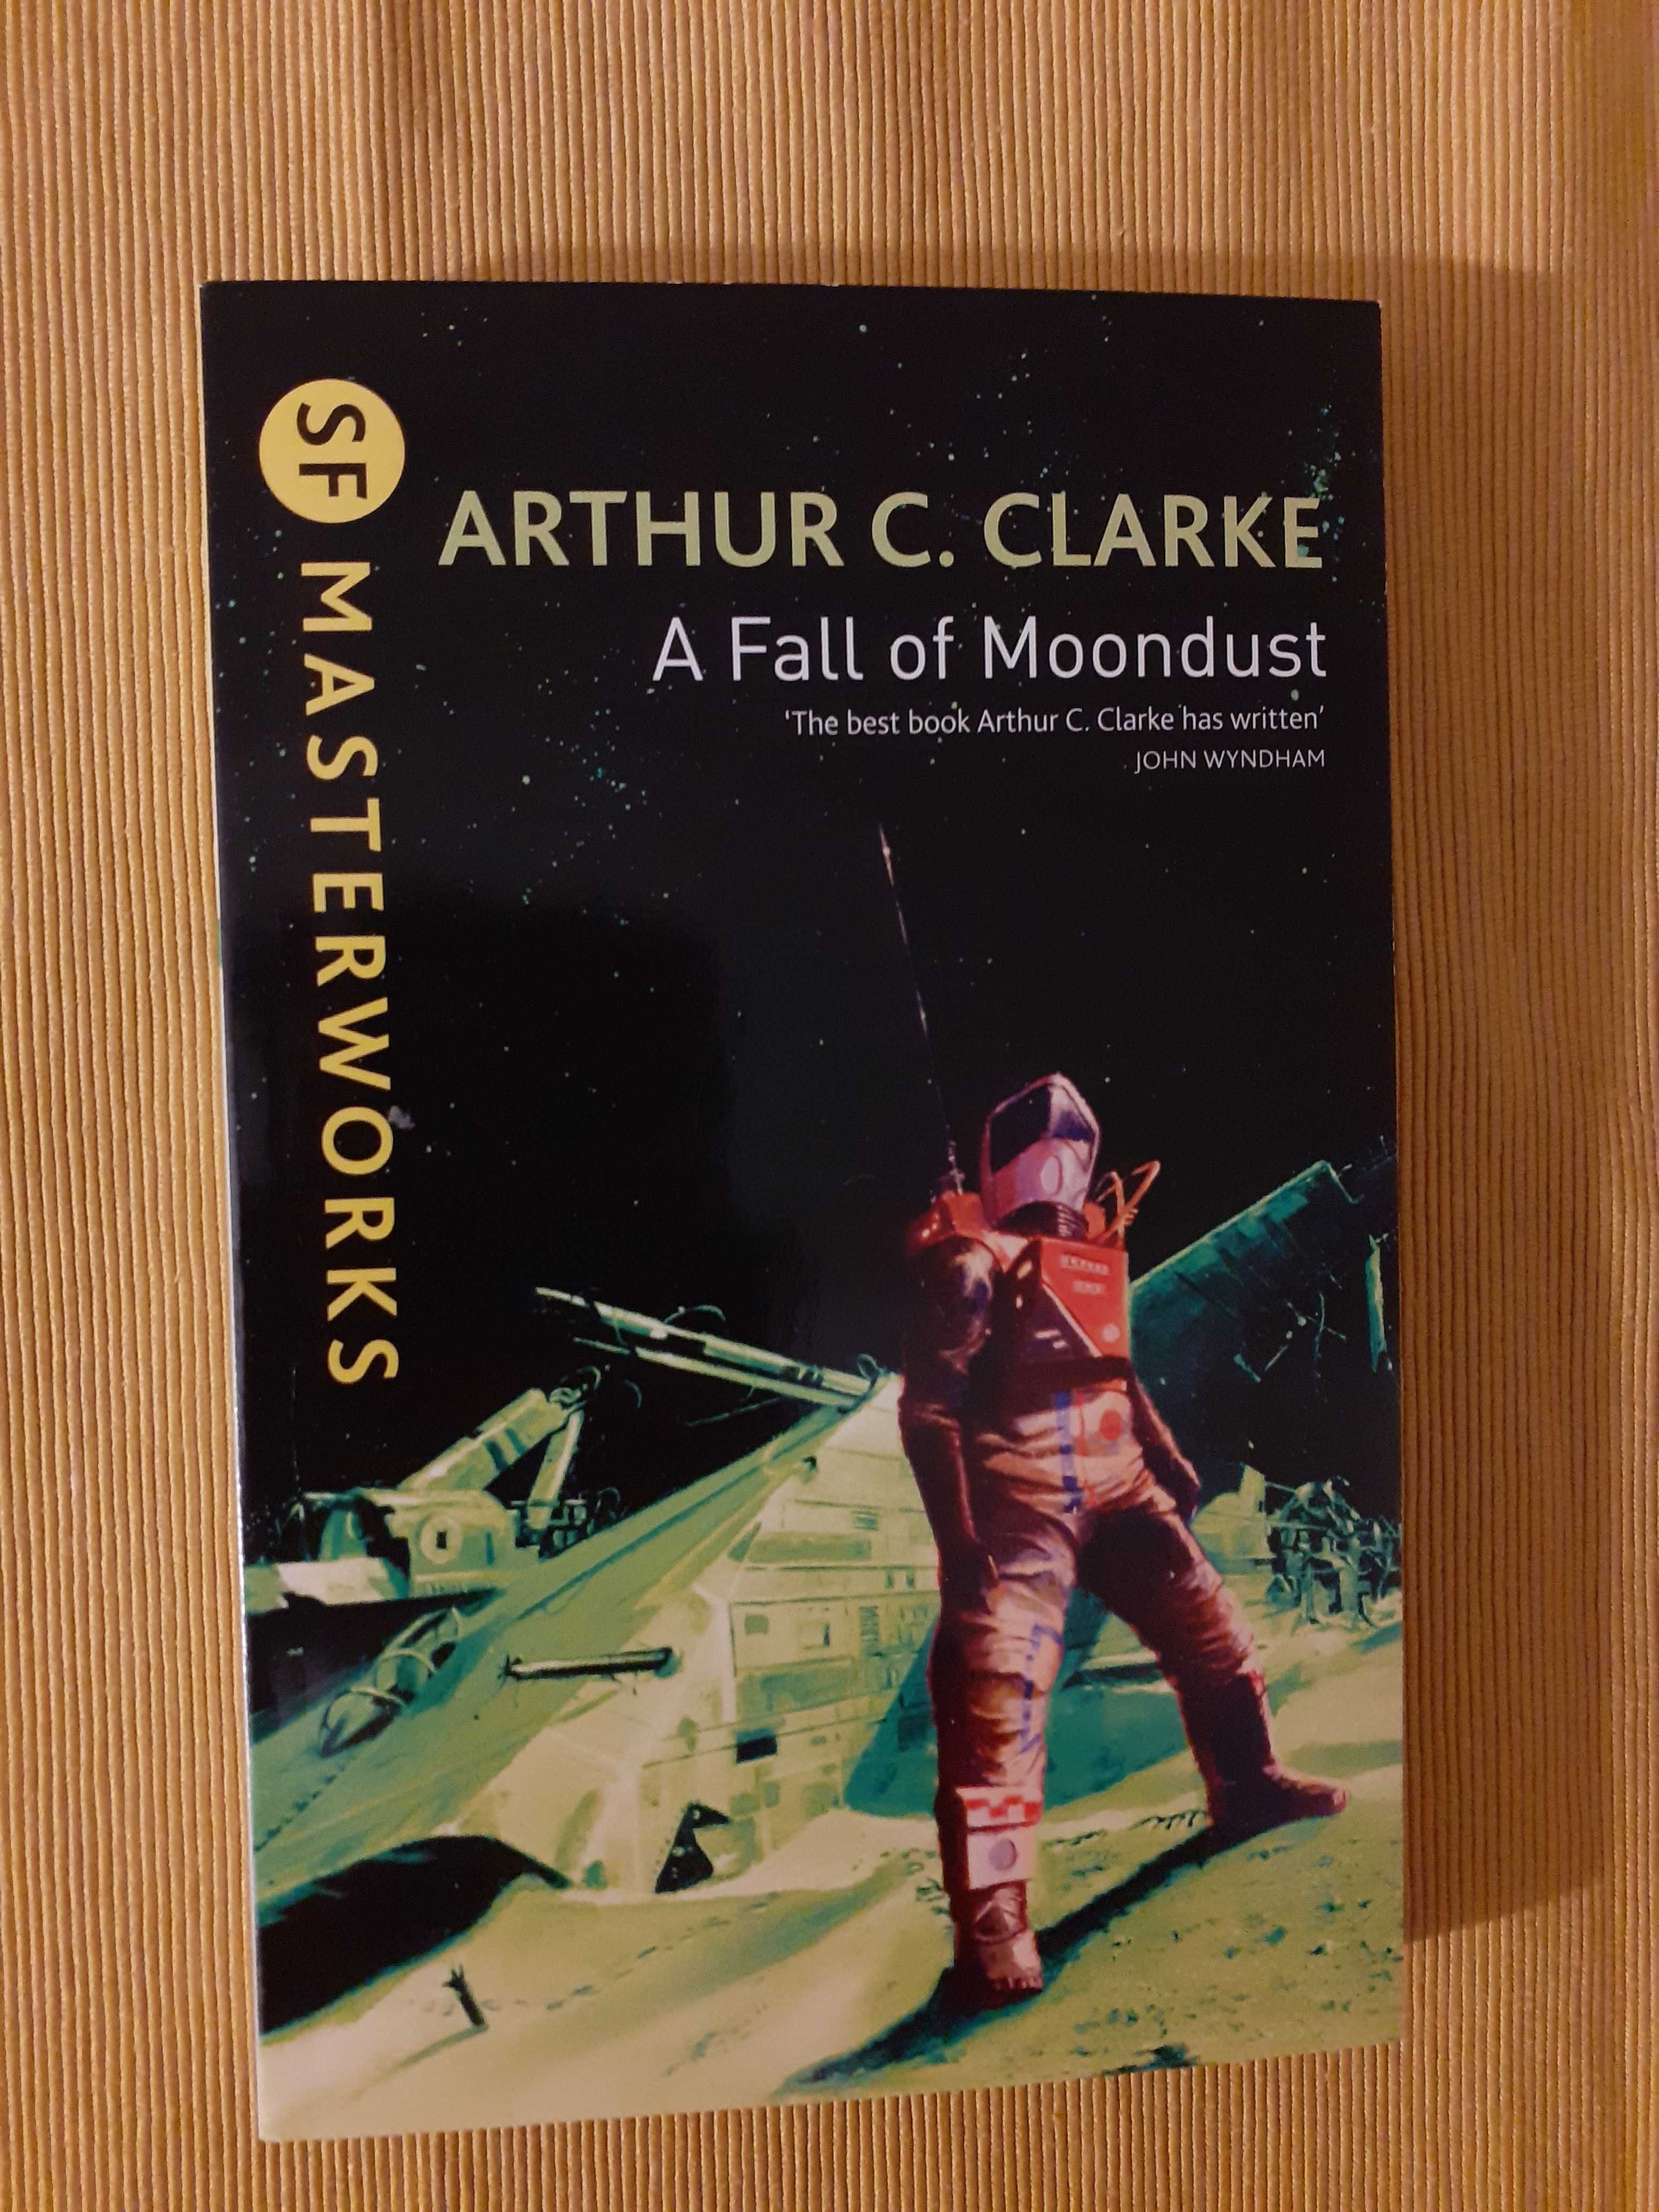 Arthur C. Clarke, A Fall of Moondust (science fiction)